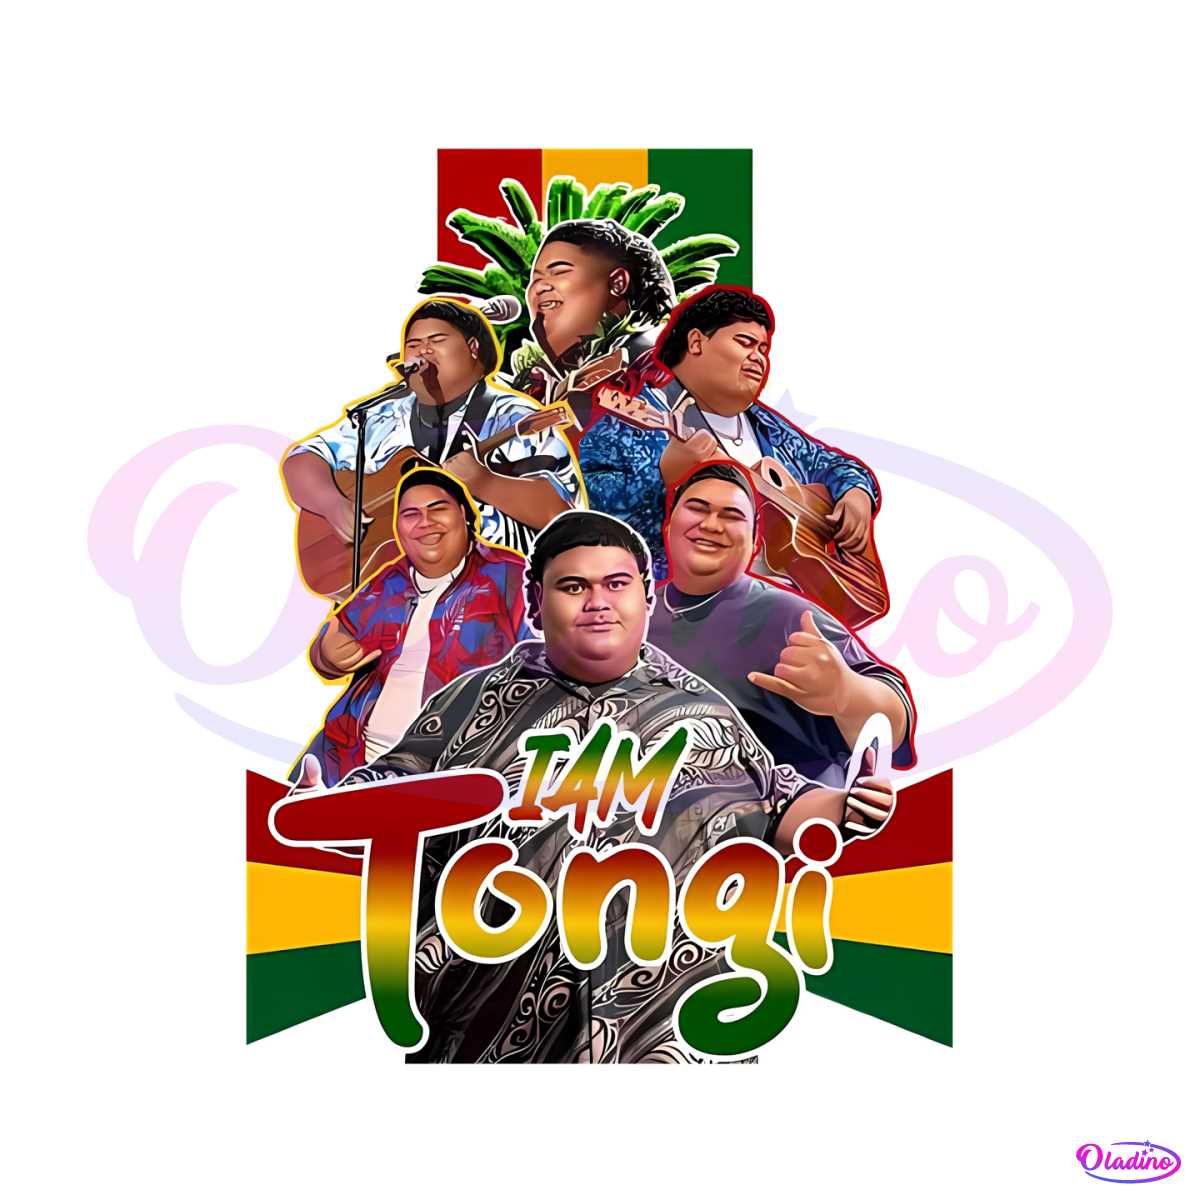 iam-tongi-singer-mahalo-american-idol-winner-png-silhouette-files